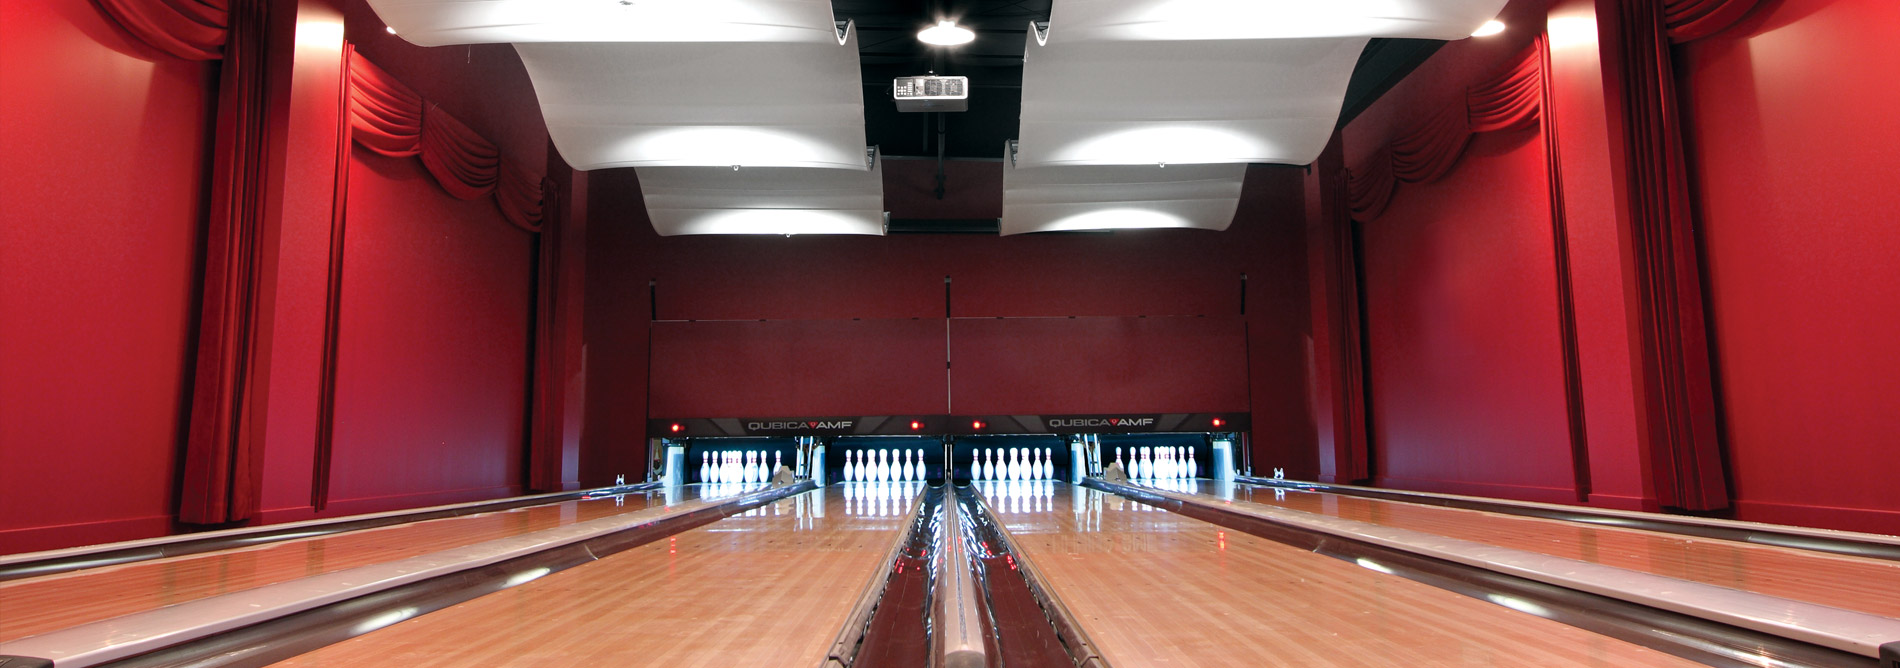 QUBICAAMF-bowling-hybrid-Rule3-banner1.jpg